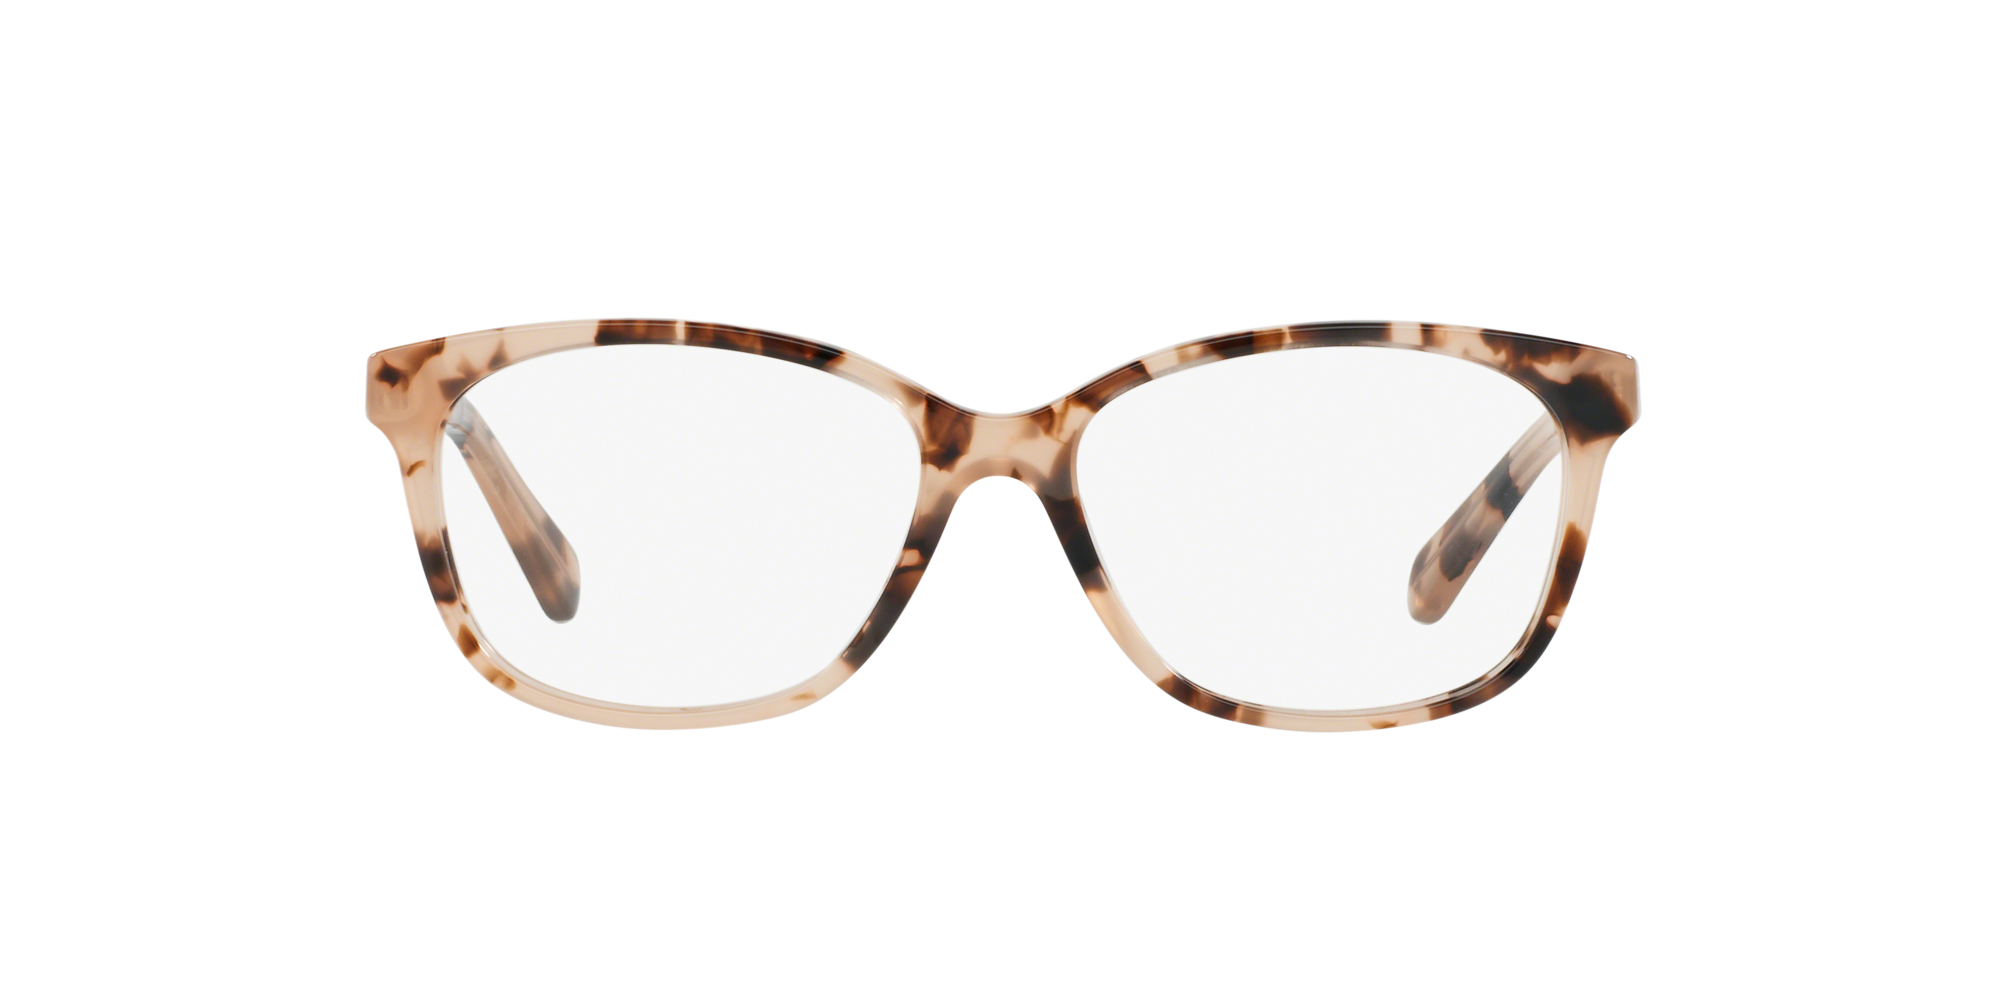 Michael Kors Sunglasses  Glasses Eyewear  LensCrafters